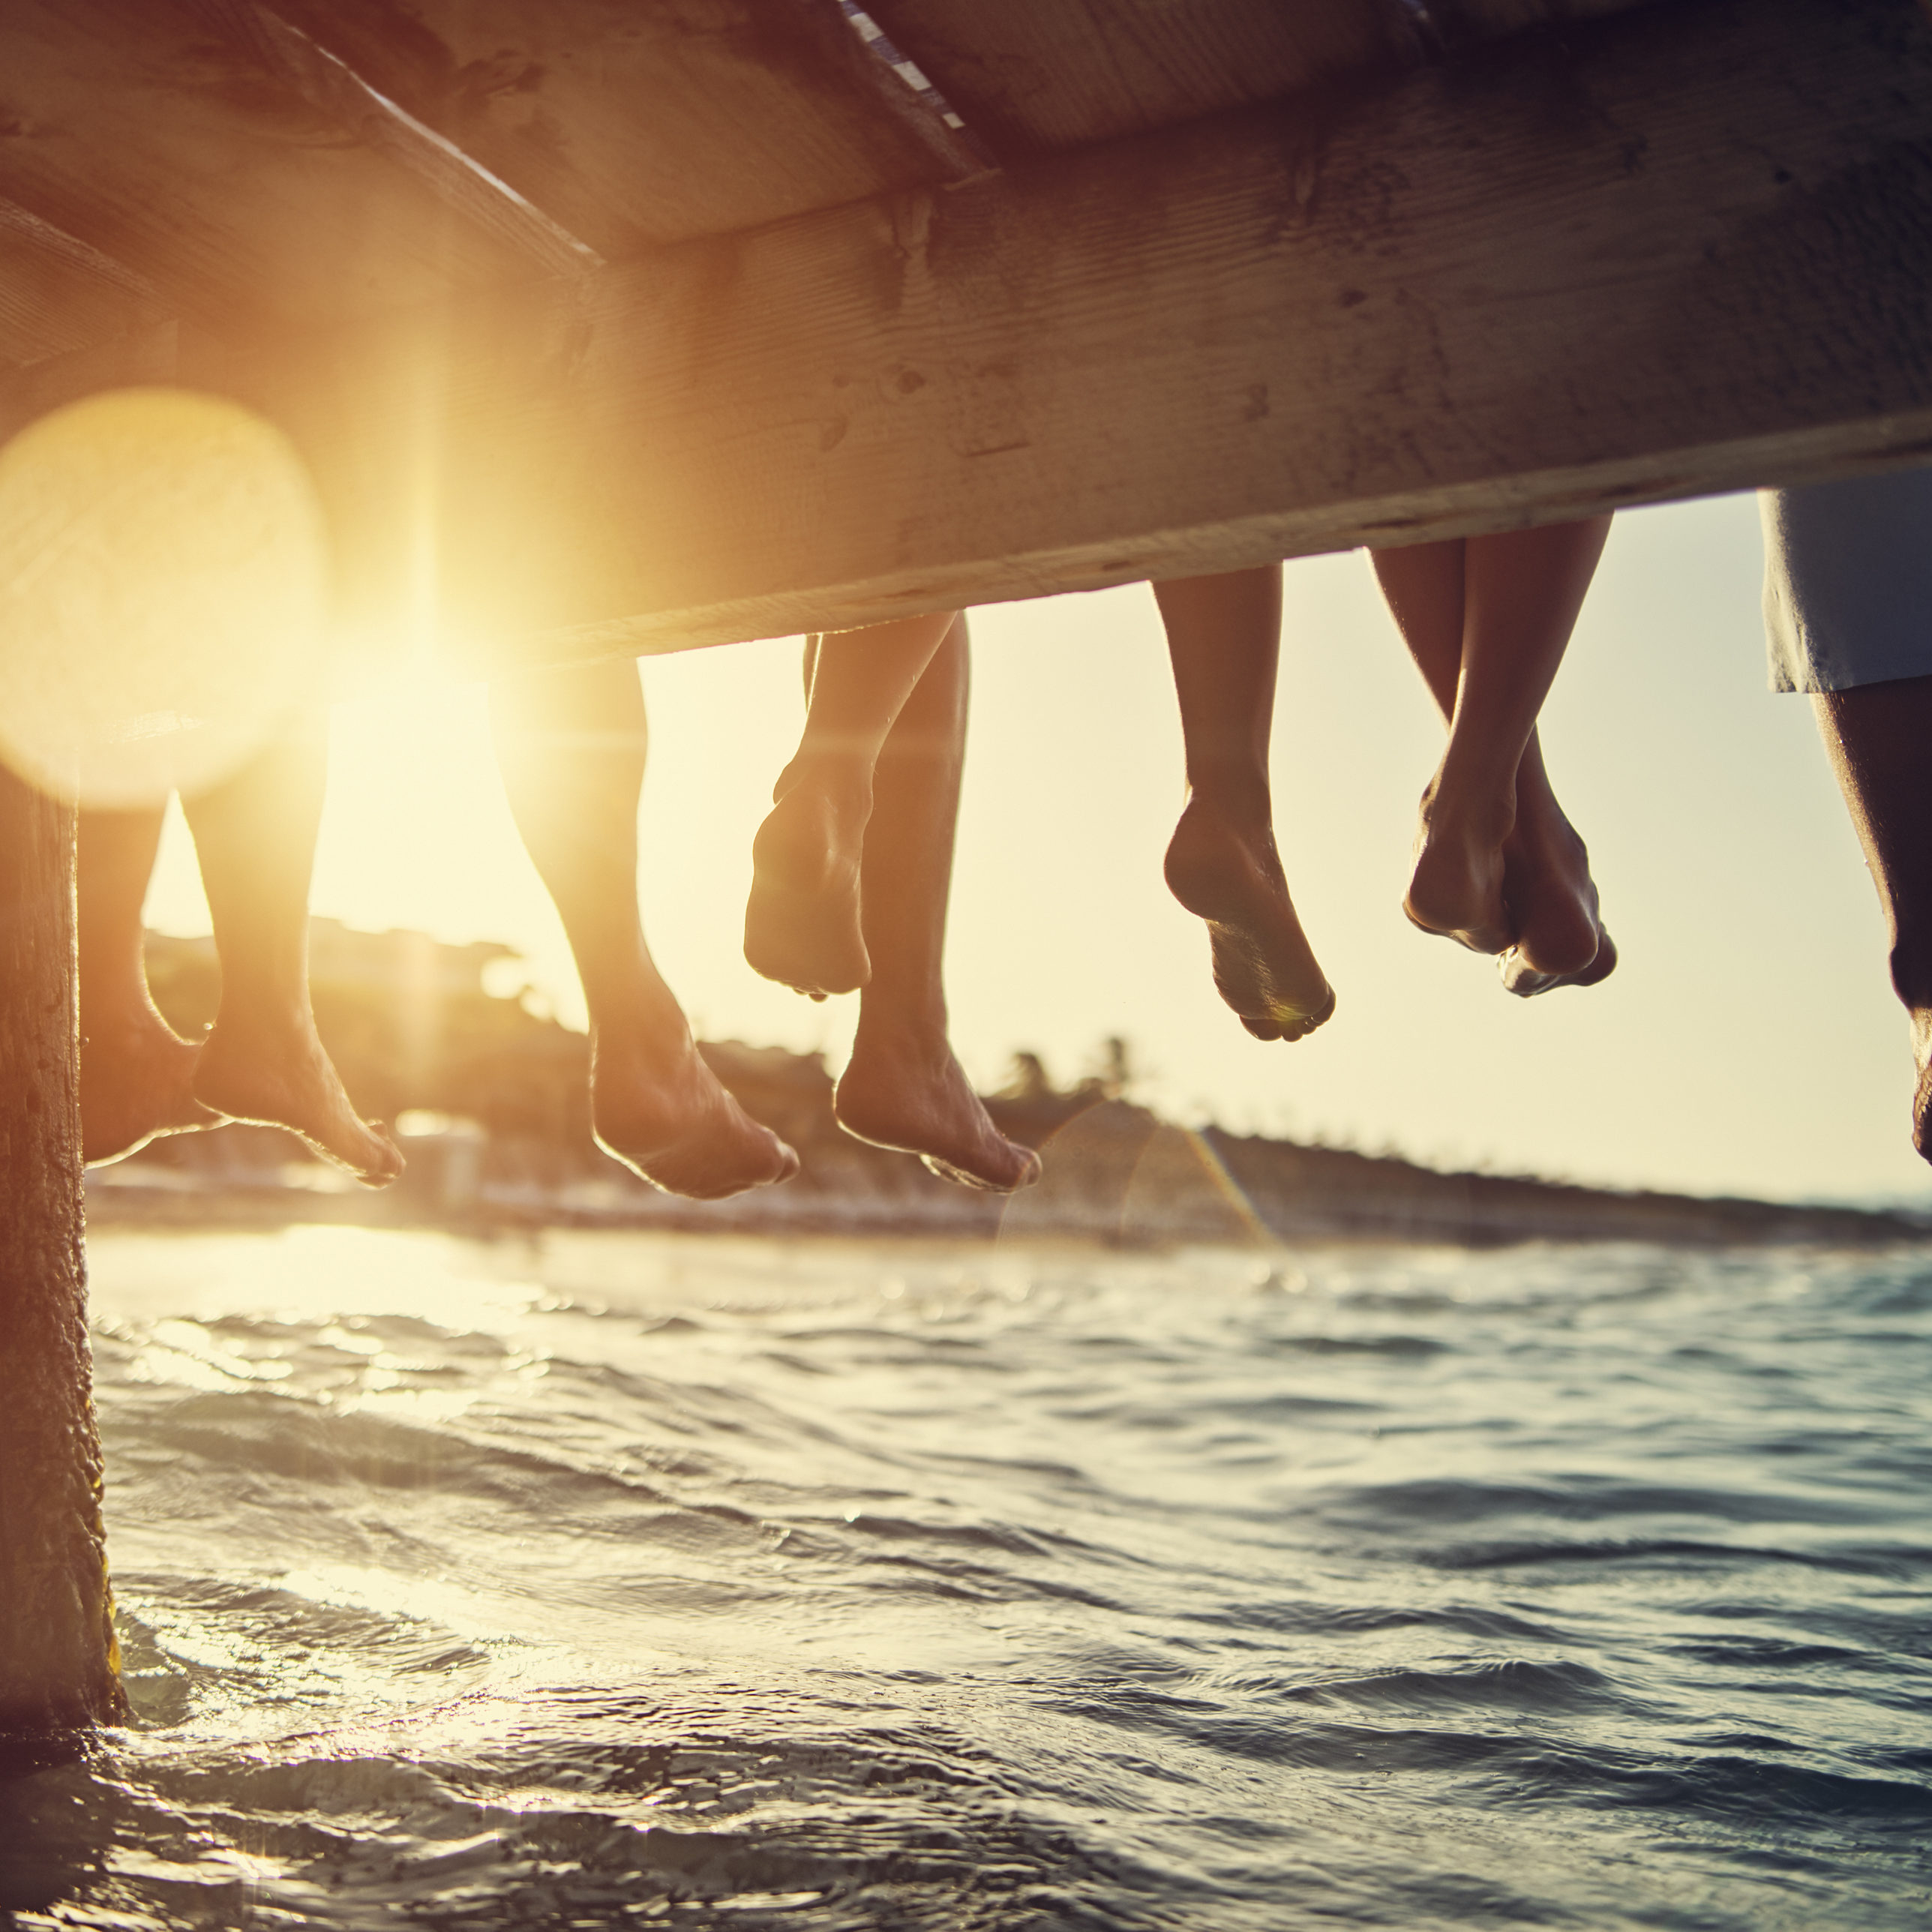 Five people having fun sitting on pier. Feet shot from below the pier. Sunny summer day evening.
Nikon D850